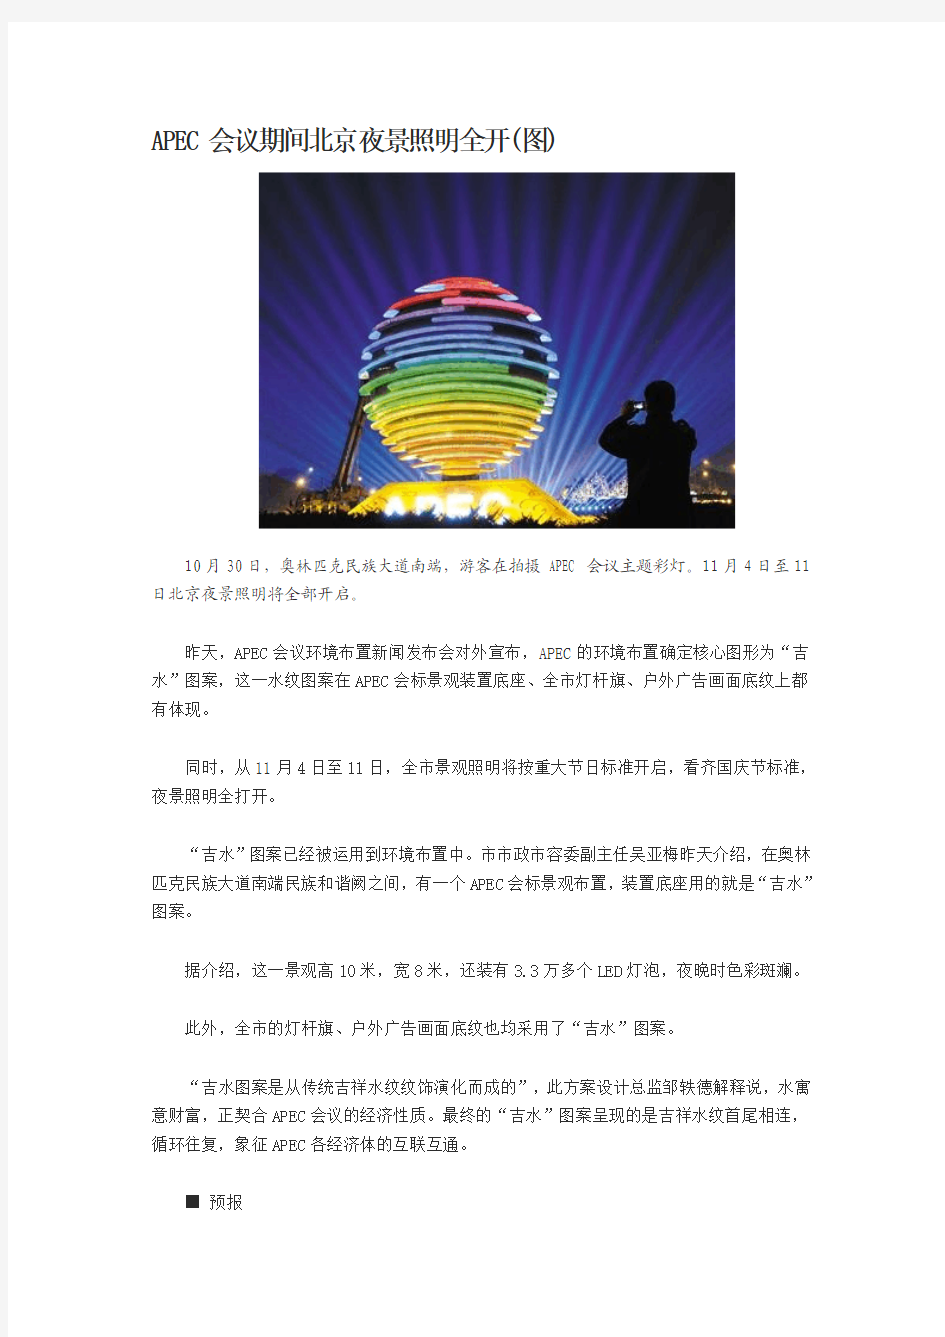 APEC会议期间北京夜景照明全开(图)